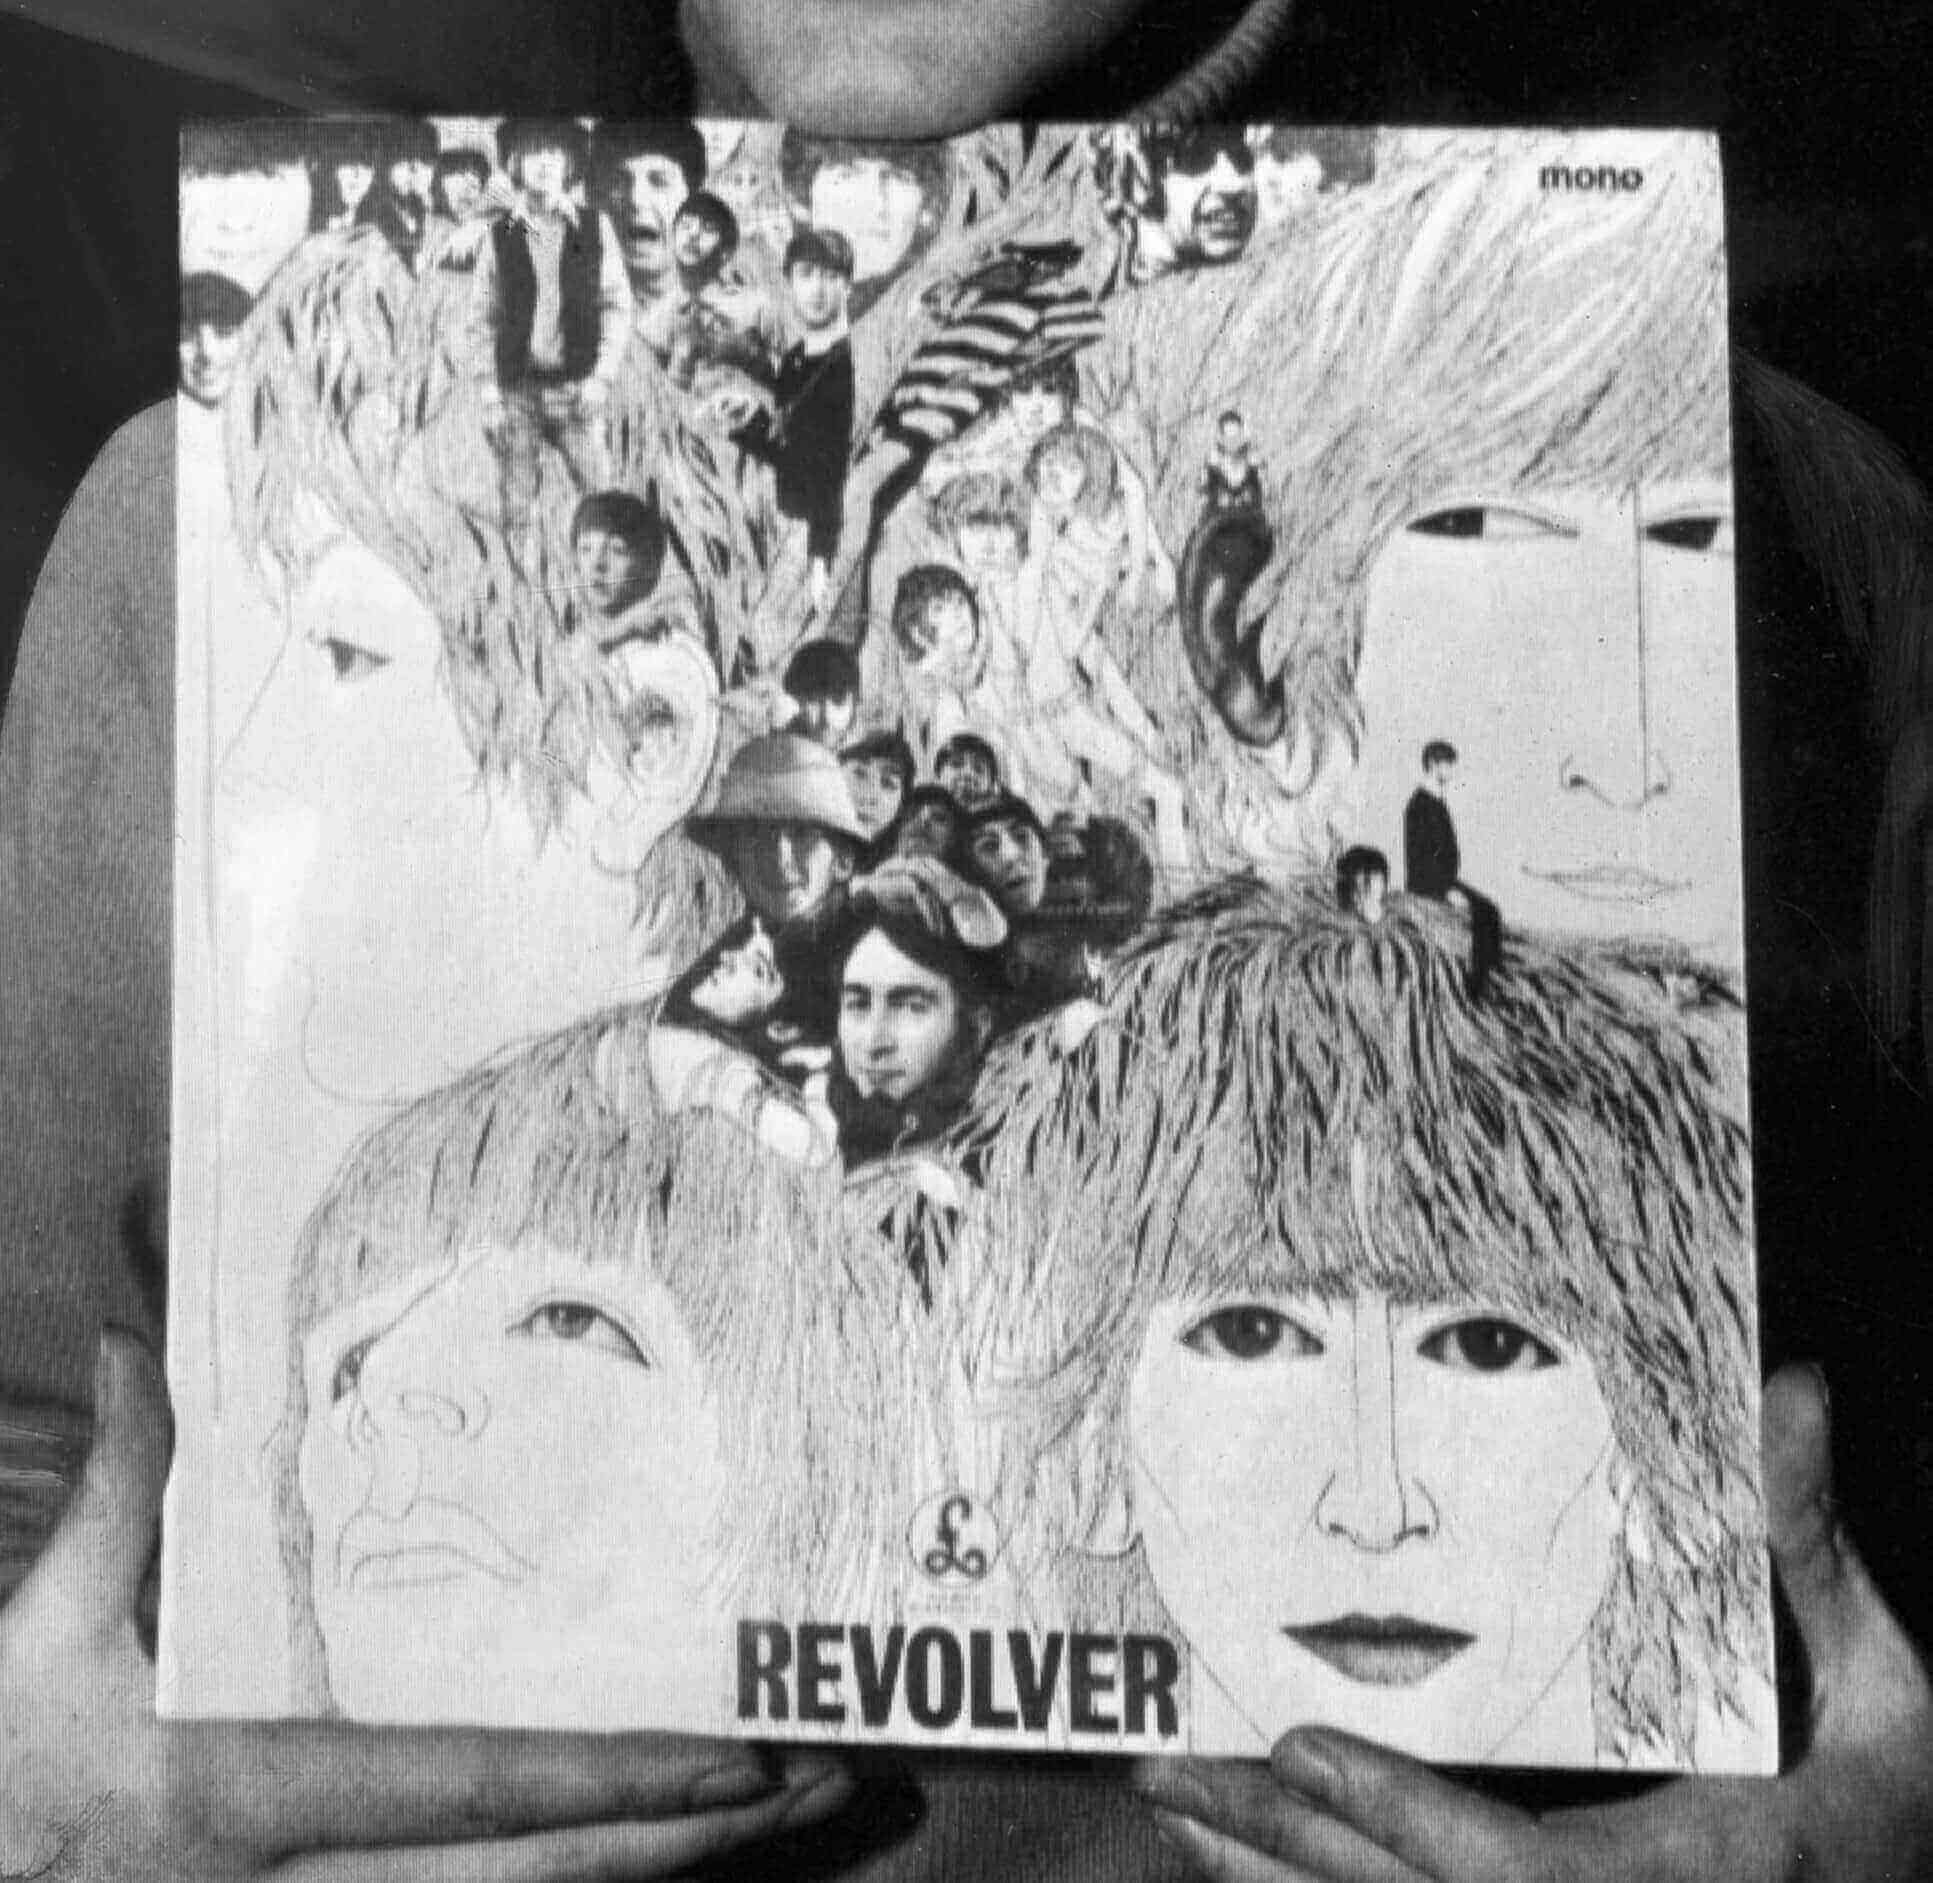 A vinyl copy of The Beatles' 'Revolver'